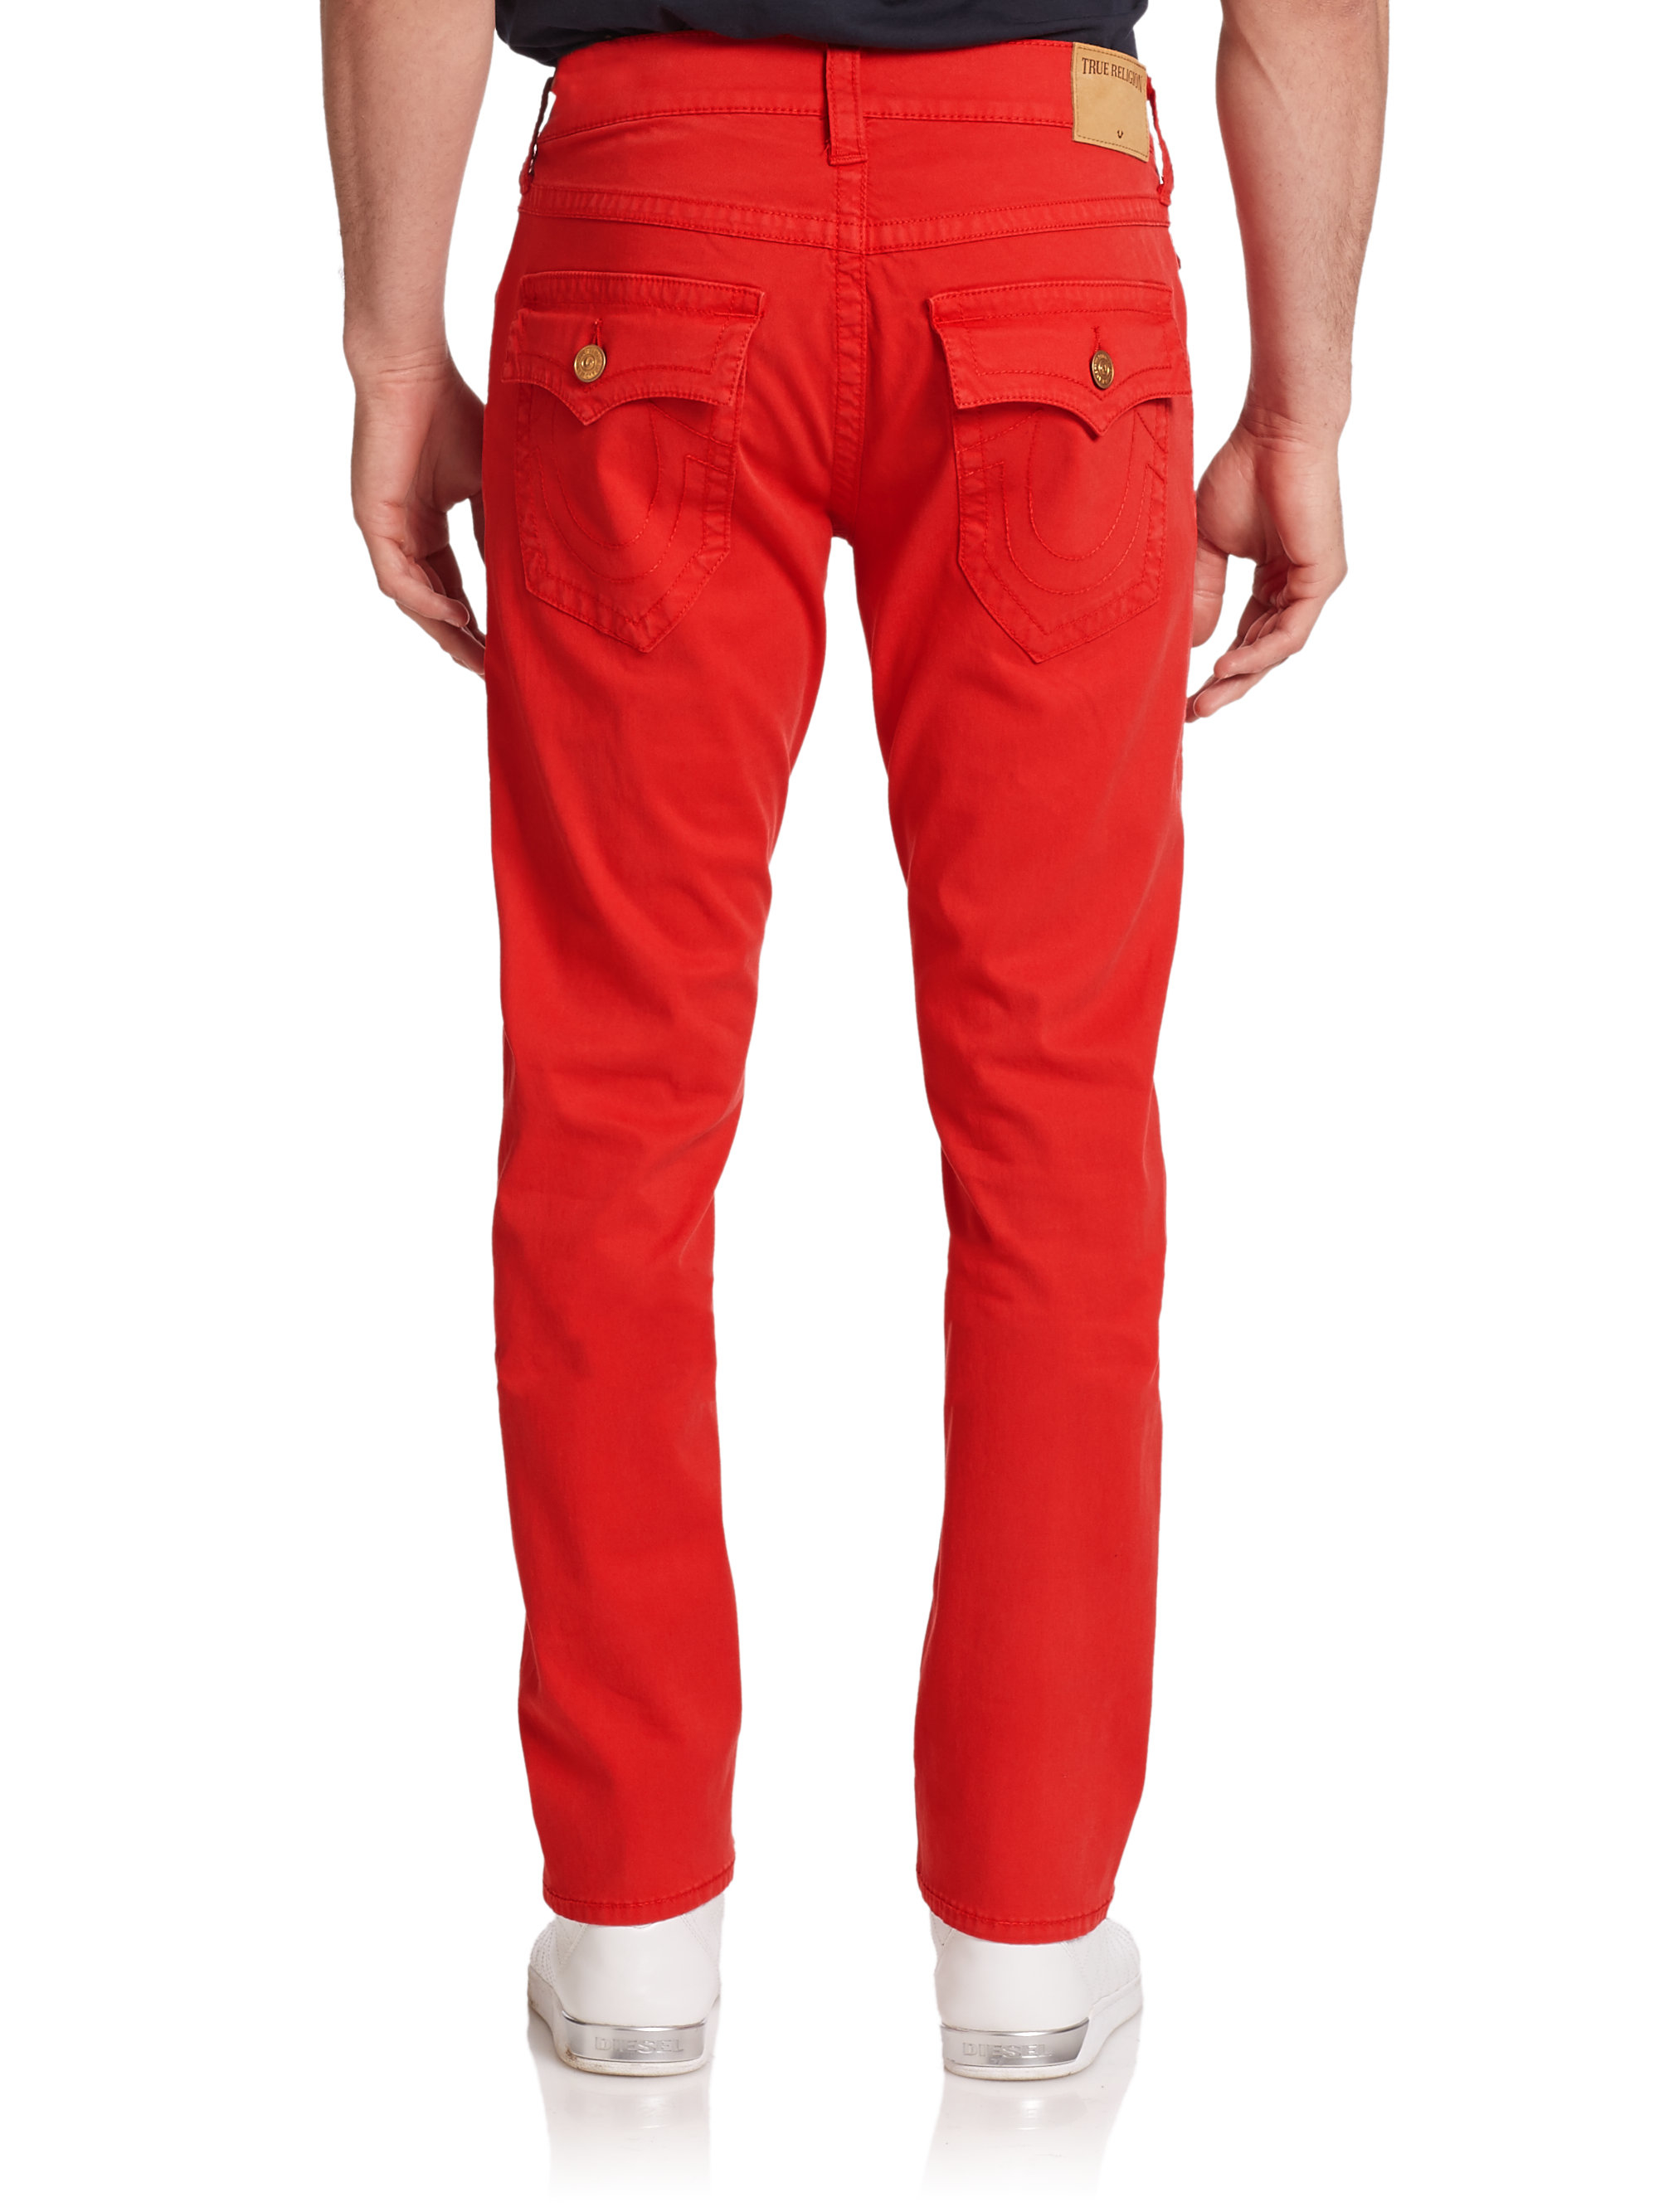 Lyst - True Religion Geno Slim Straight-Leg Jeans in Red for Men